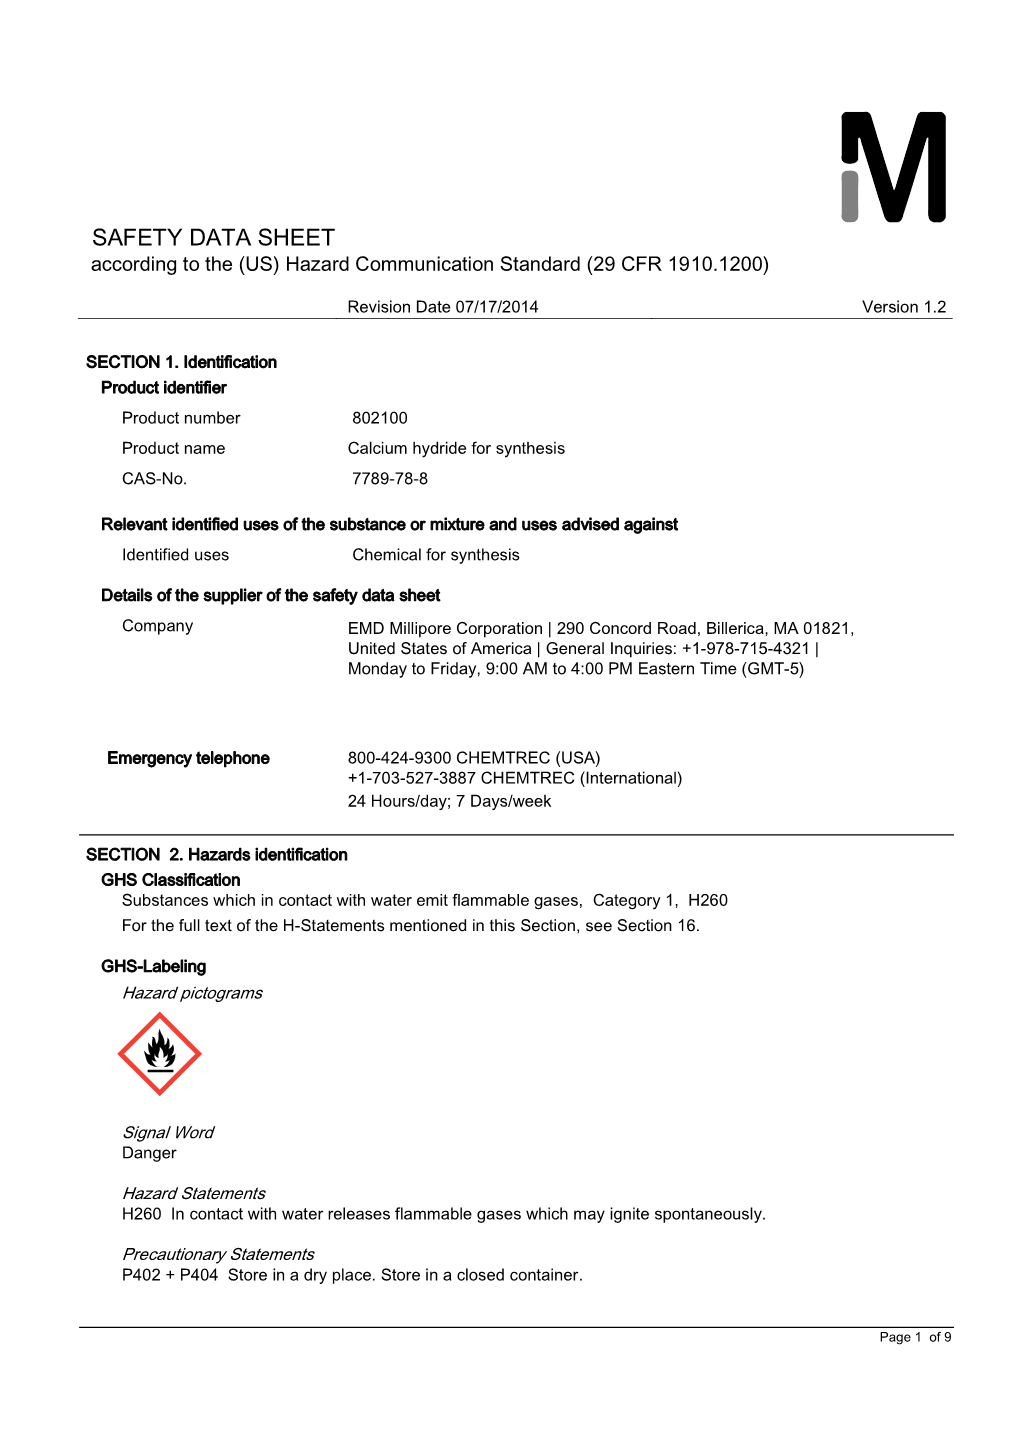 SAFETY DATA SHEET According to the (US) Hazard Communication Standard (29 CFR 1910.1200)